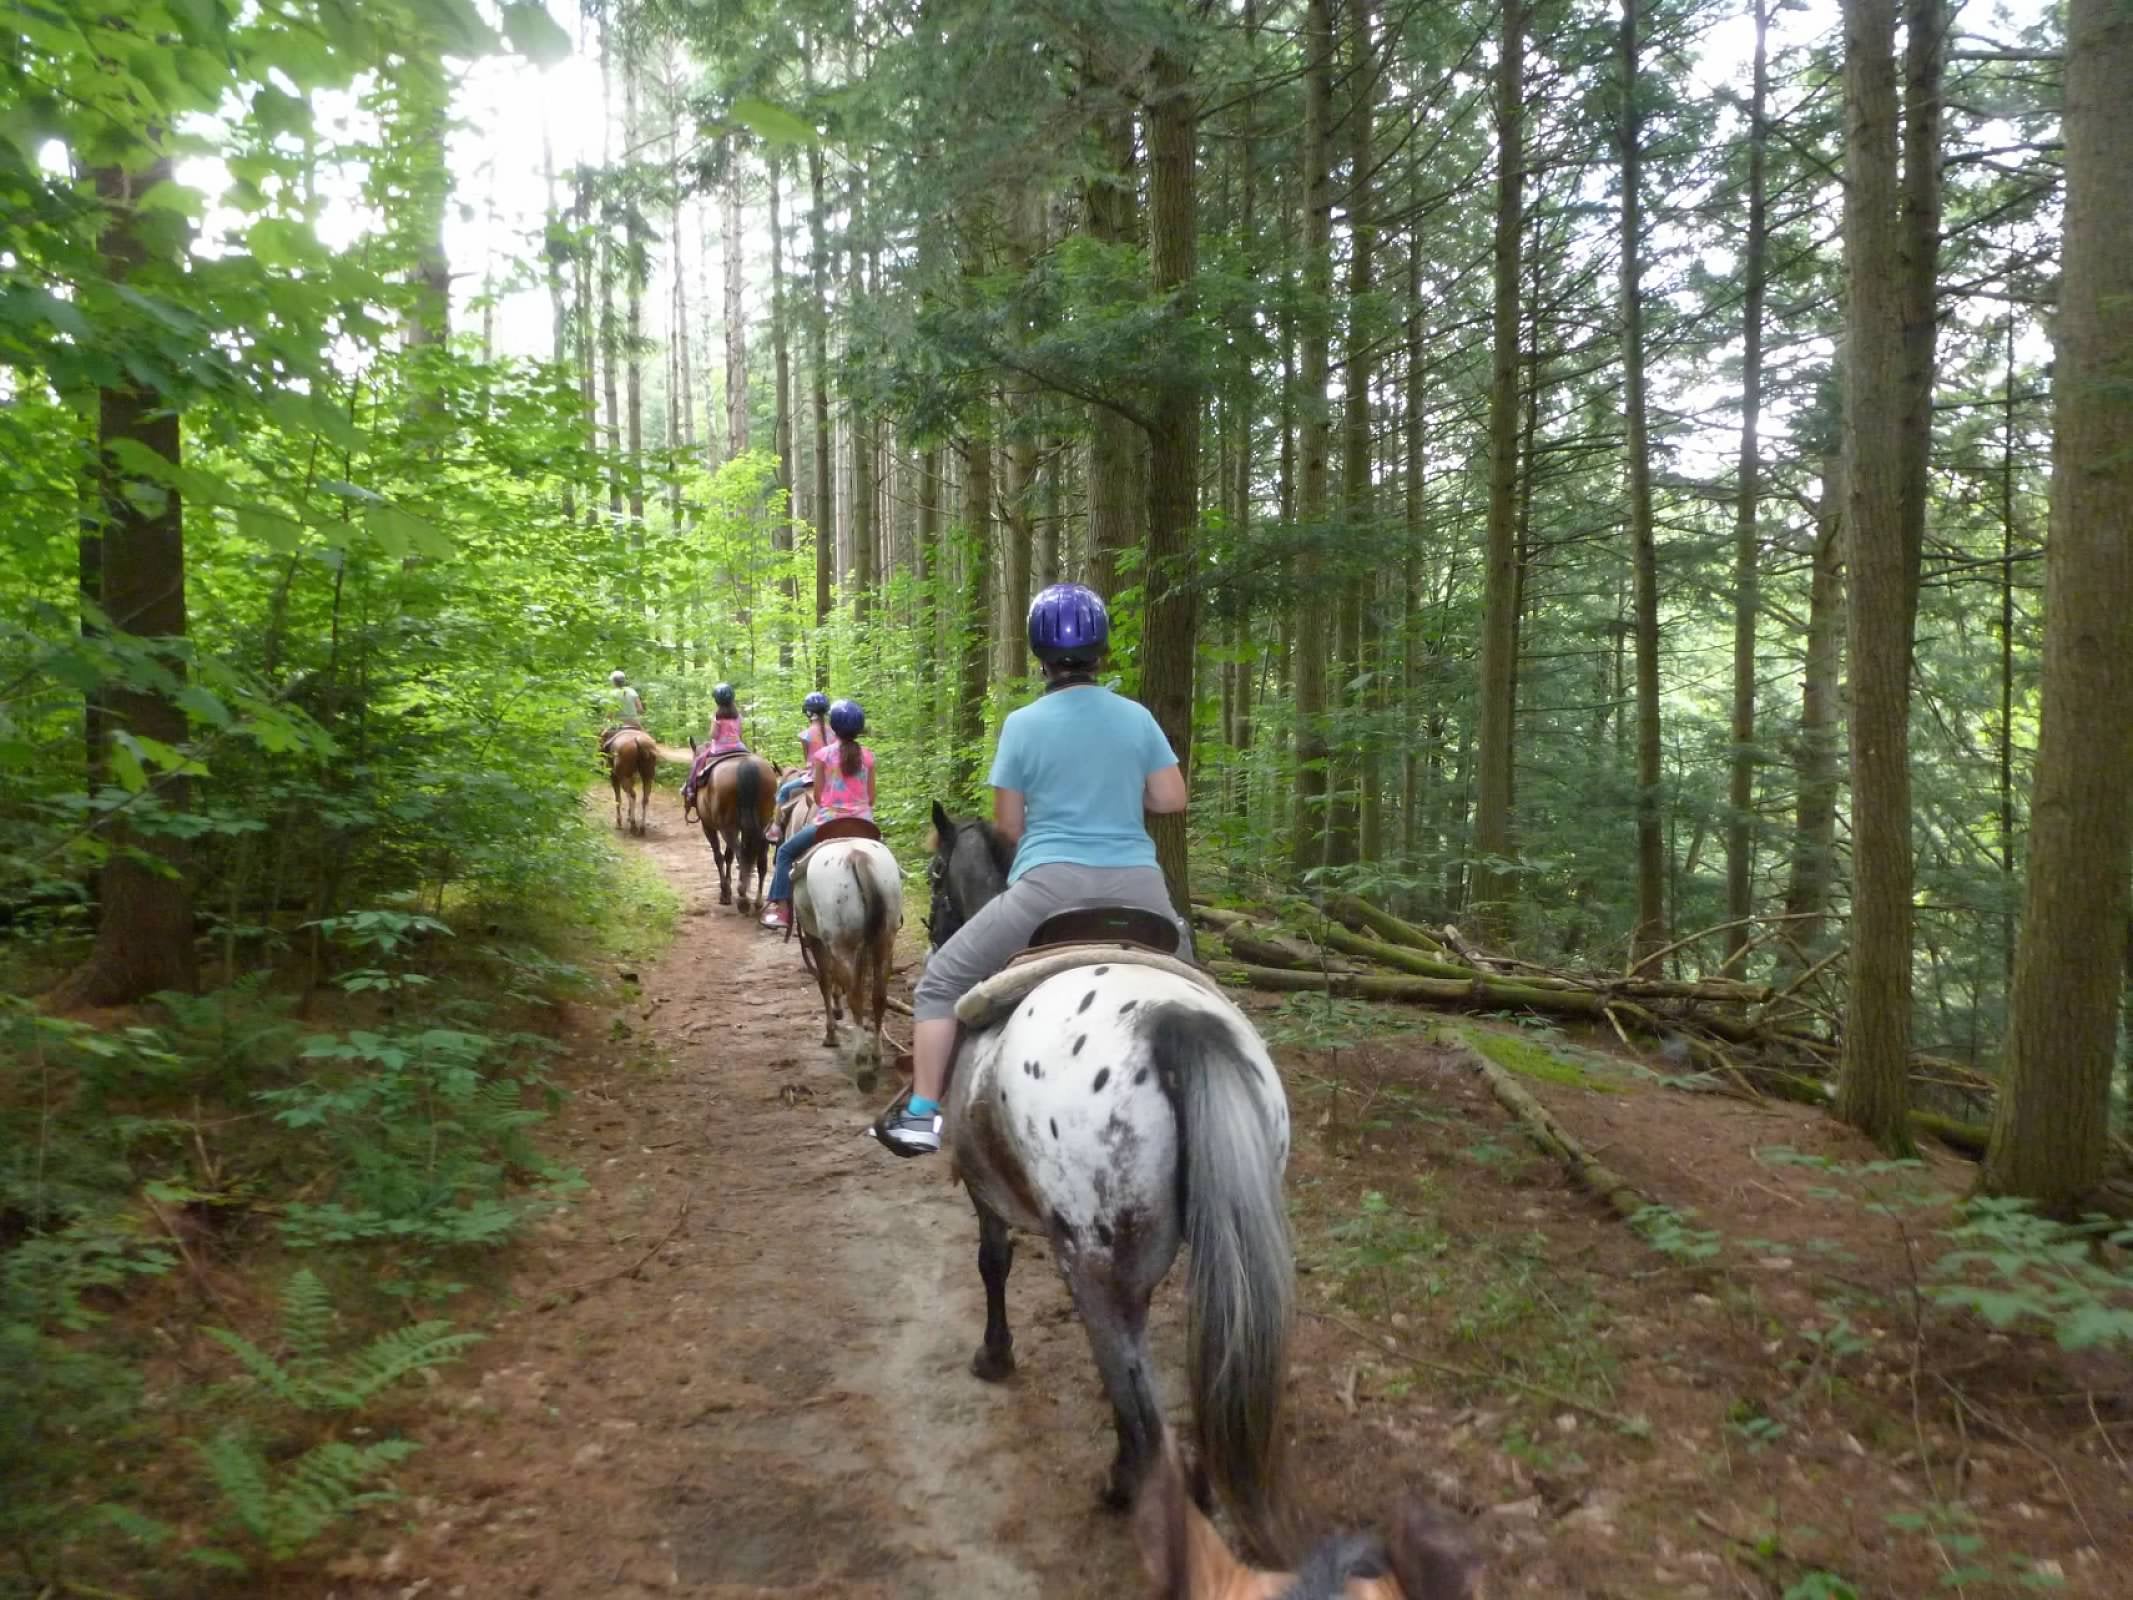 Horseback-riding 10 minutes away in Danby